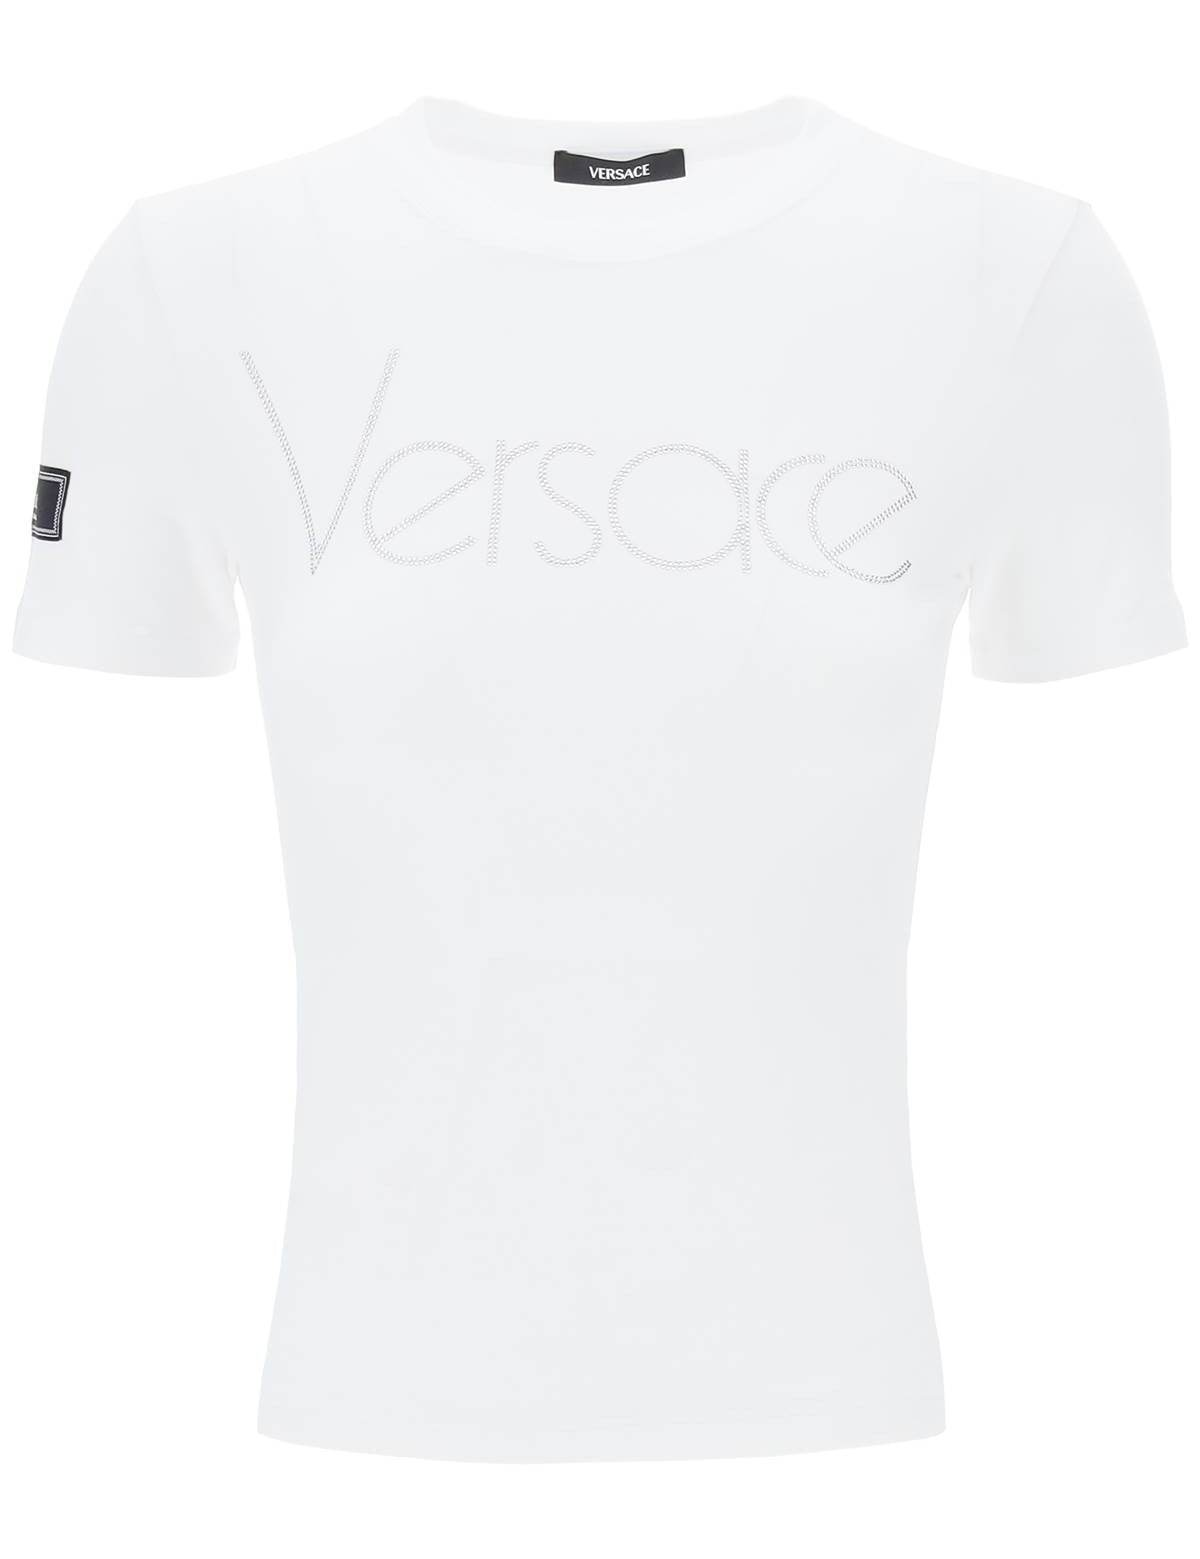 versace-logo-rhinestone-t-shirt.jpg